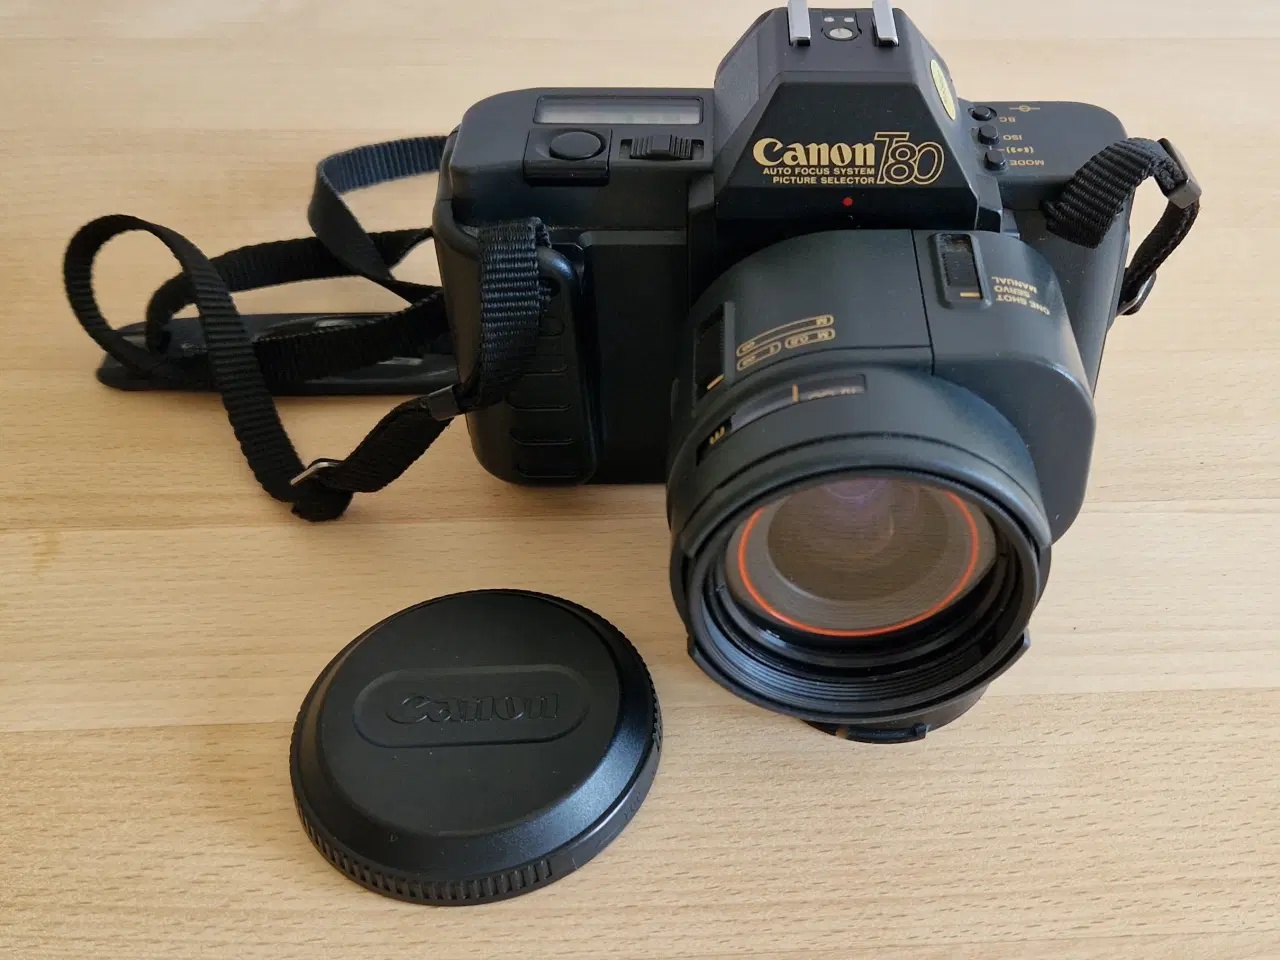 Billede 1 - Canon T80 spejlreflex AC 35-70 mm 1:3.5-4.5 zoom l